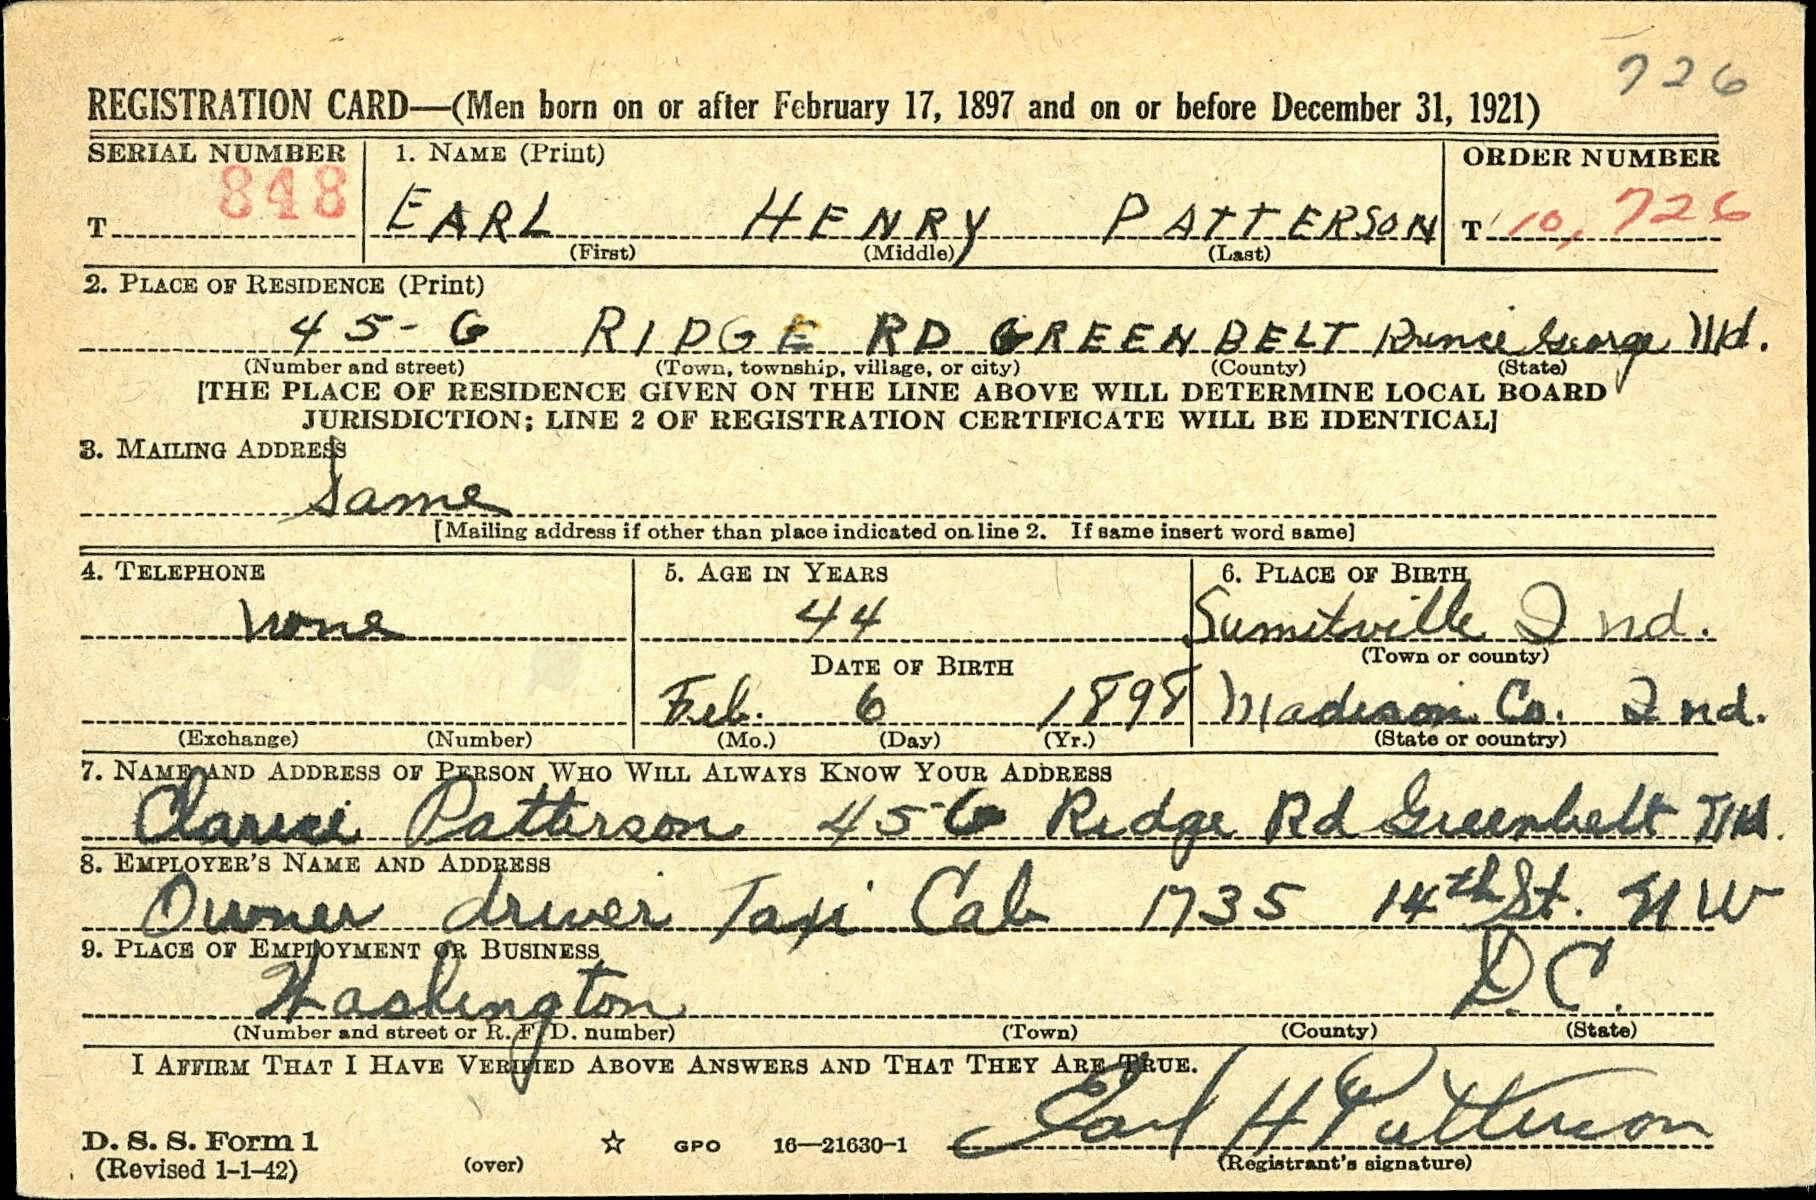 World War II Draft Registration Card for Earl Henry Patterson